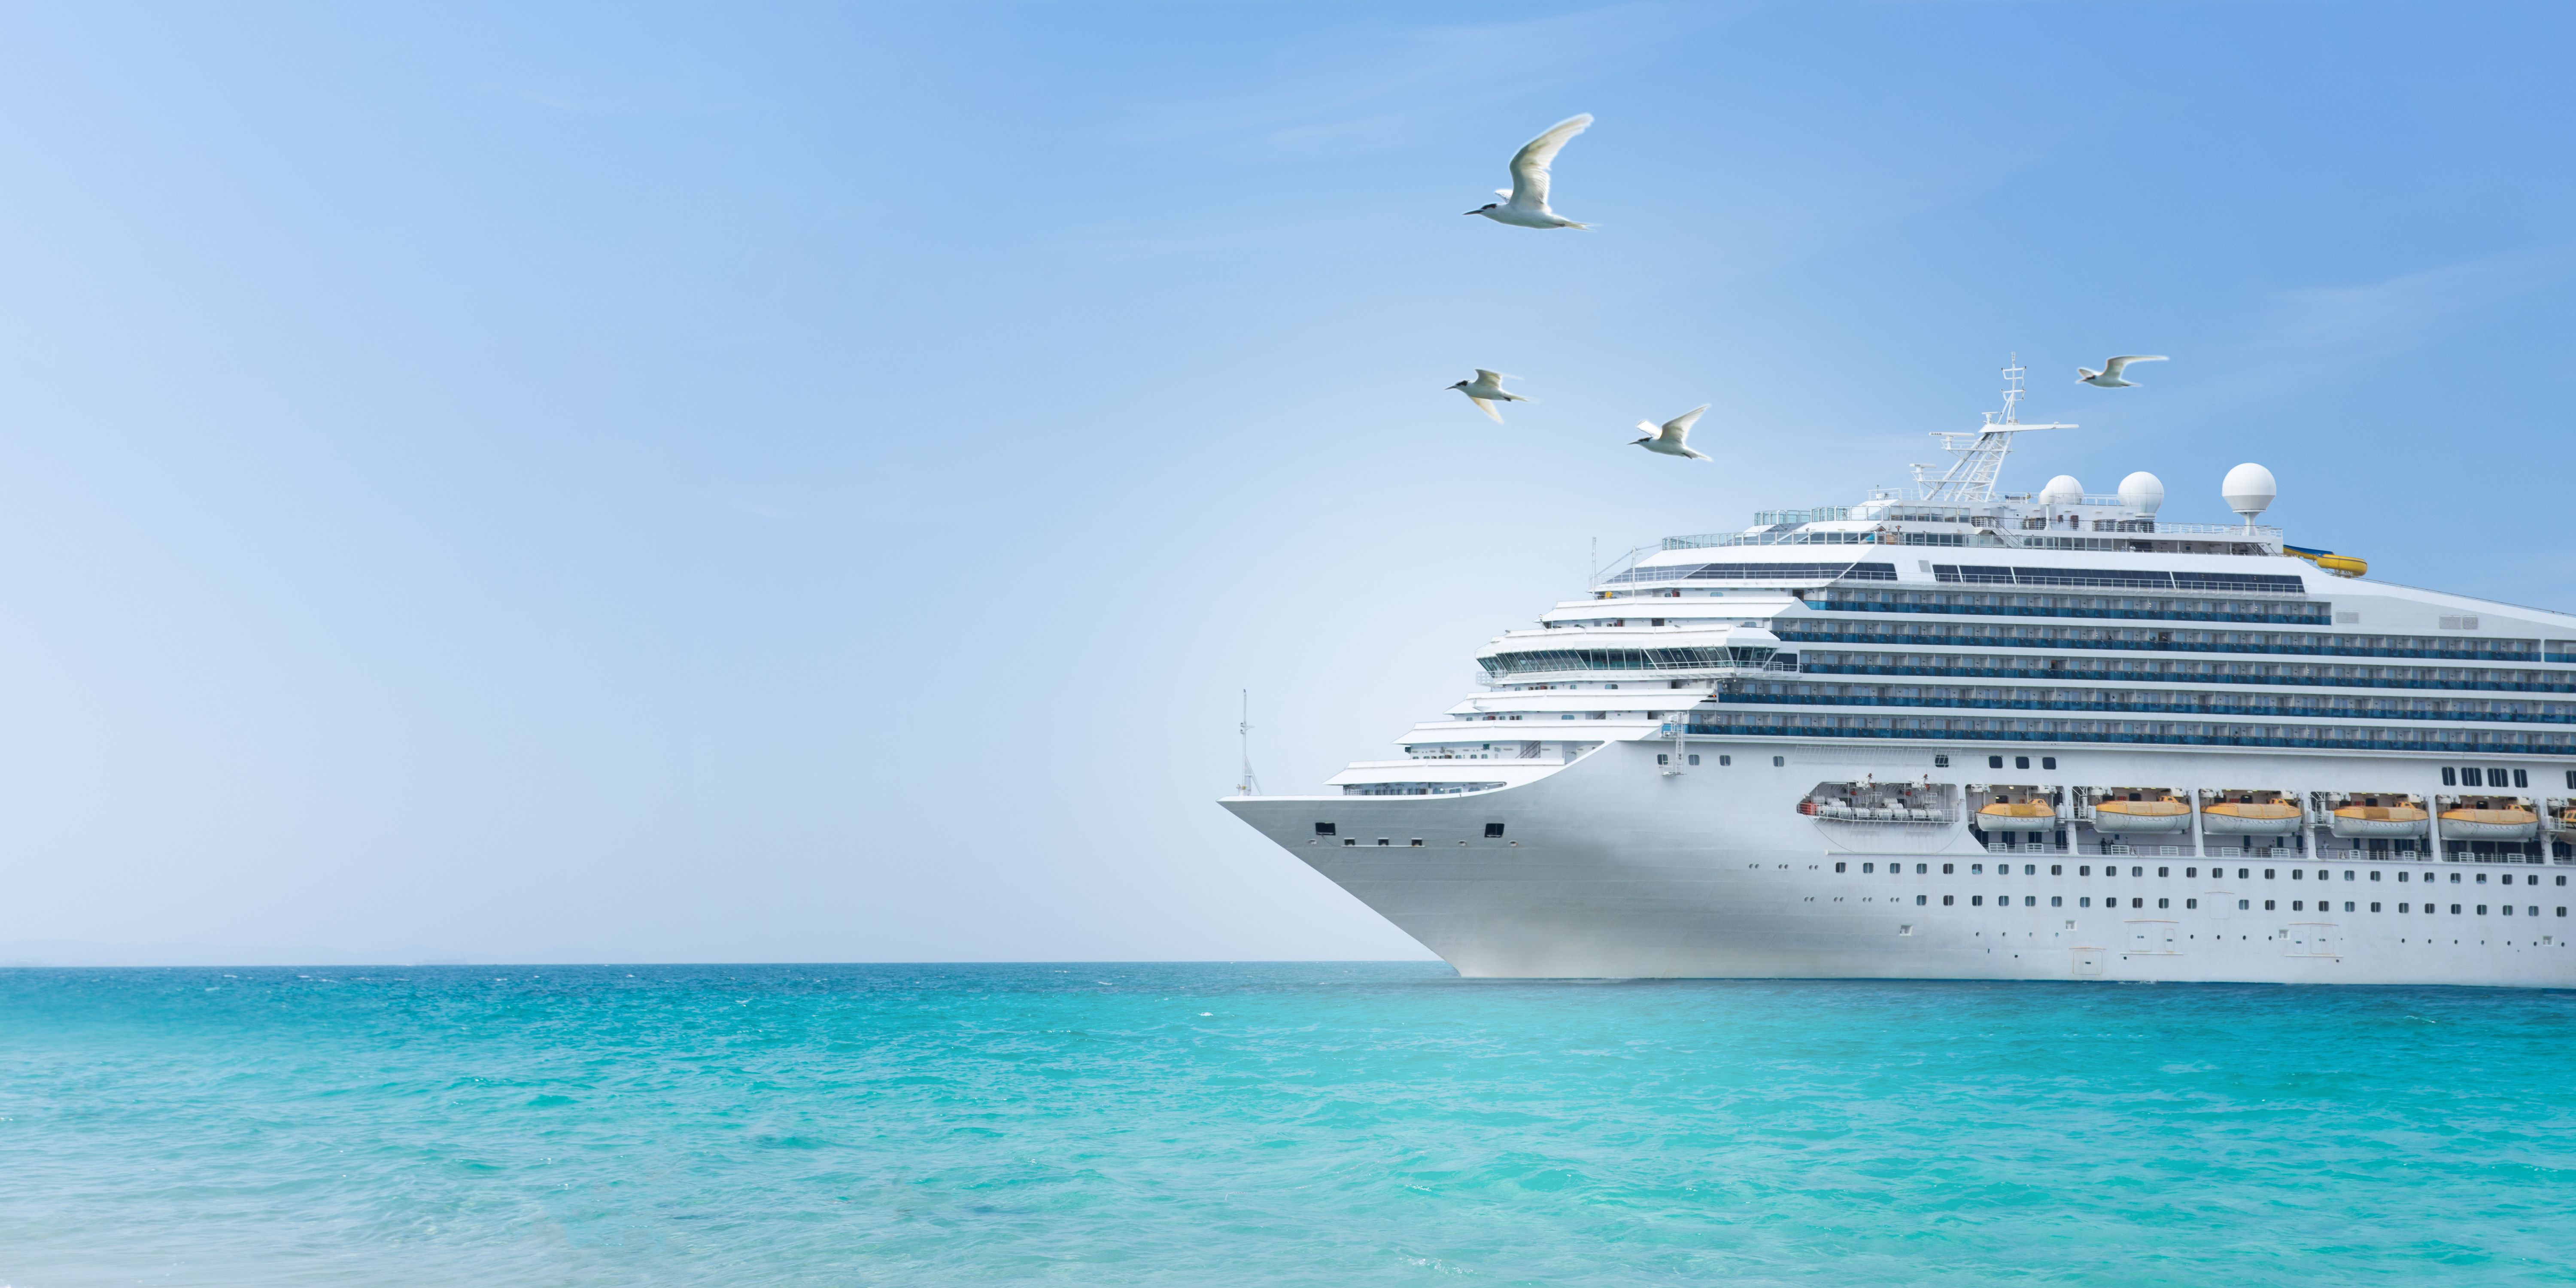 Cruise ship with seagulls overhead